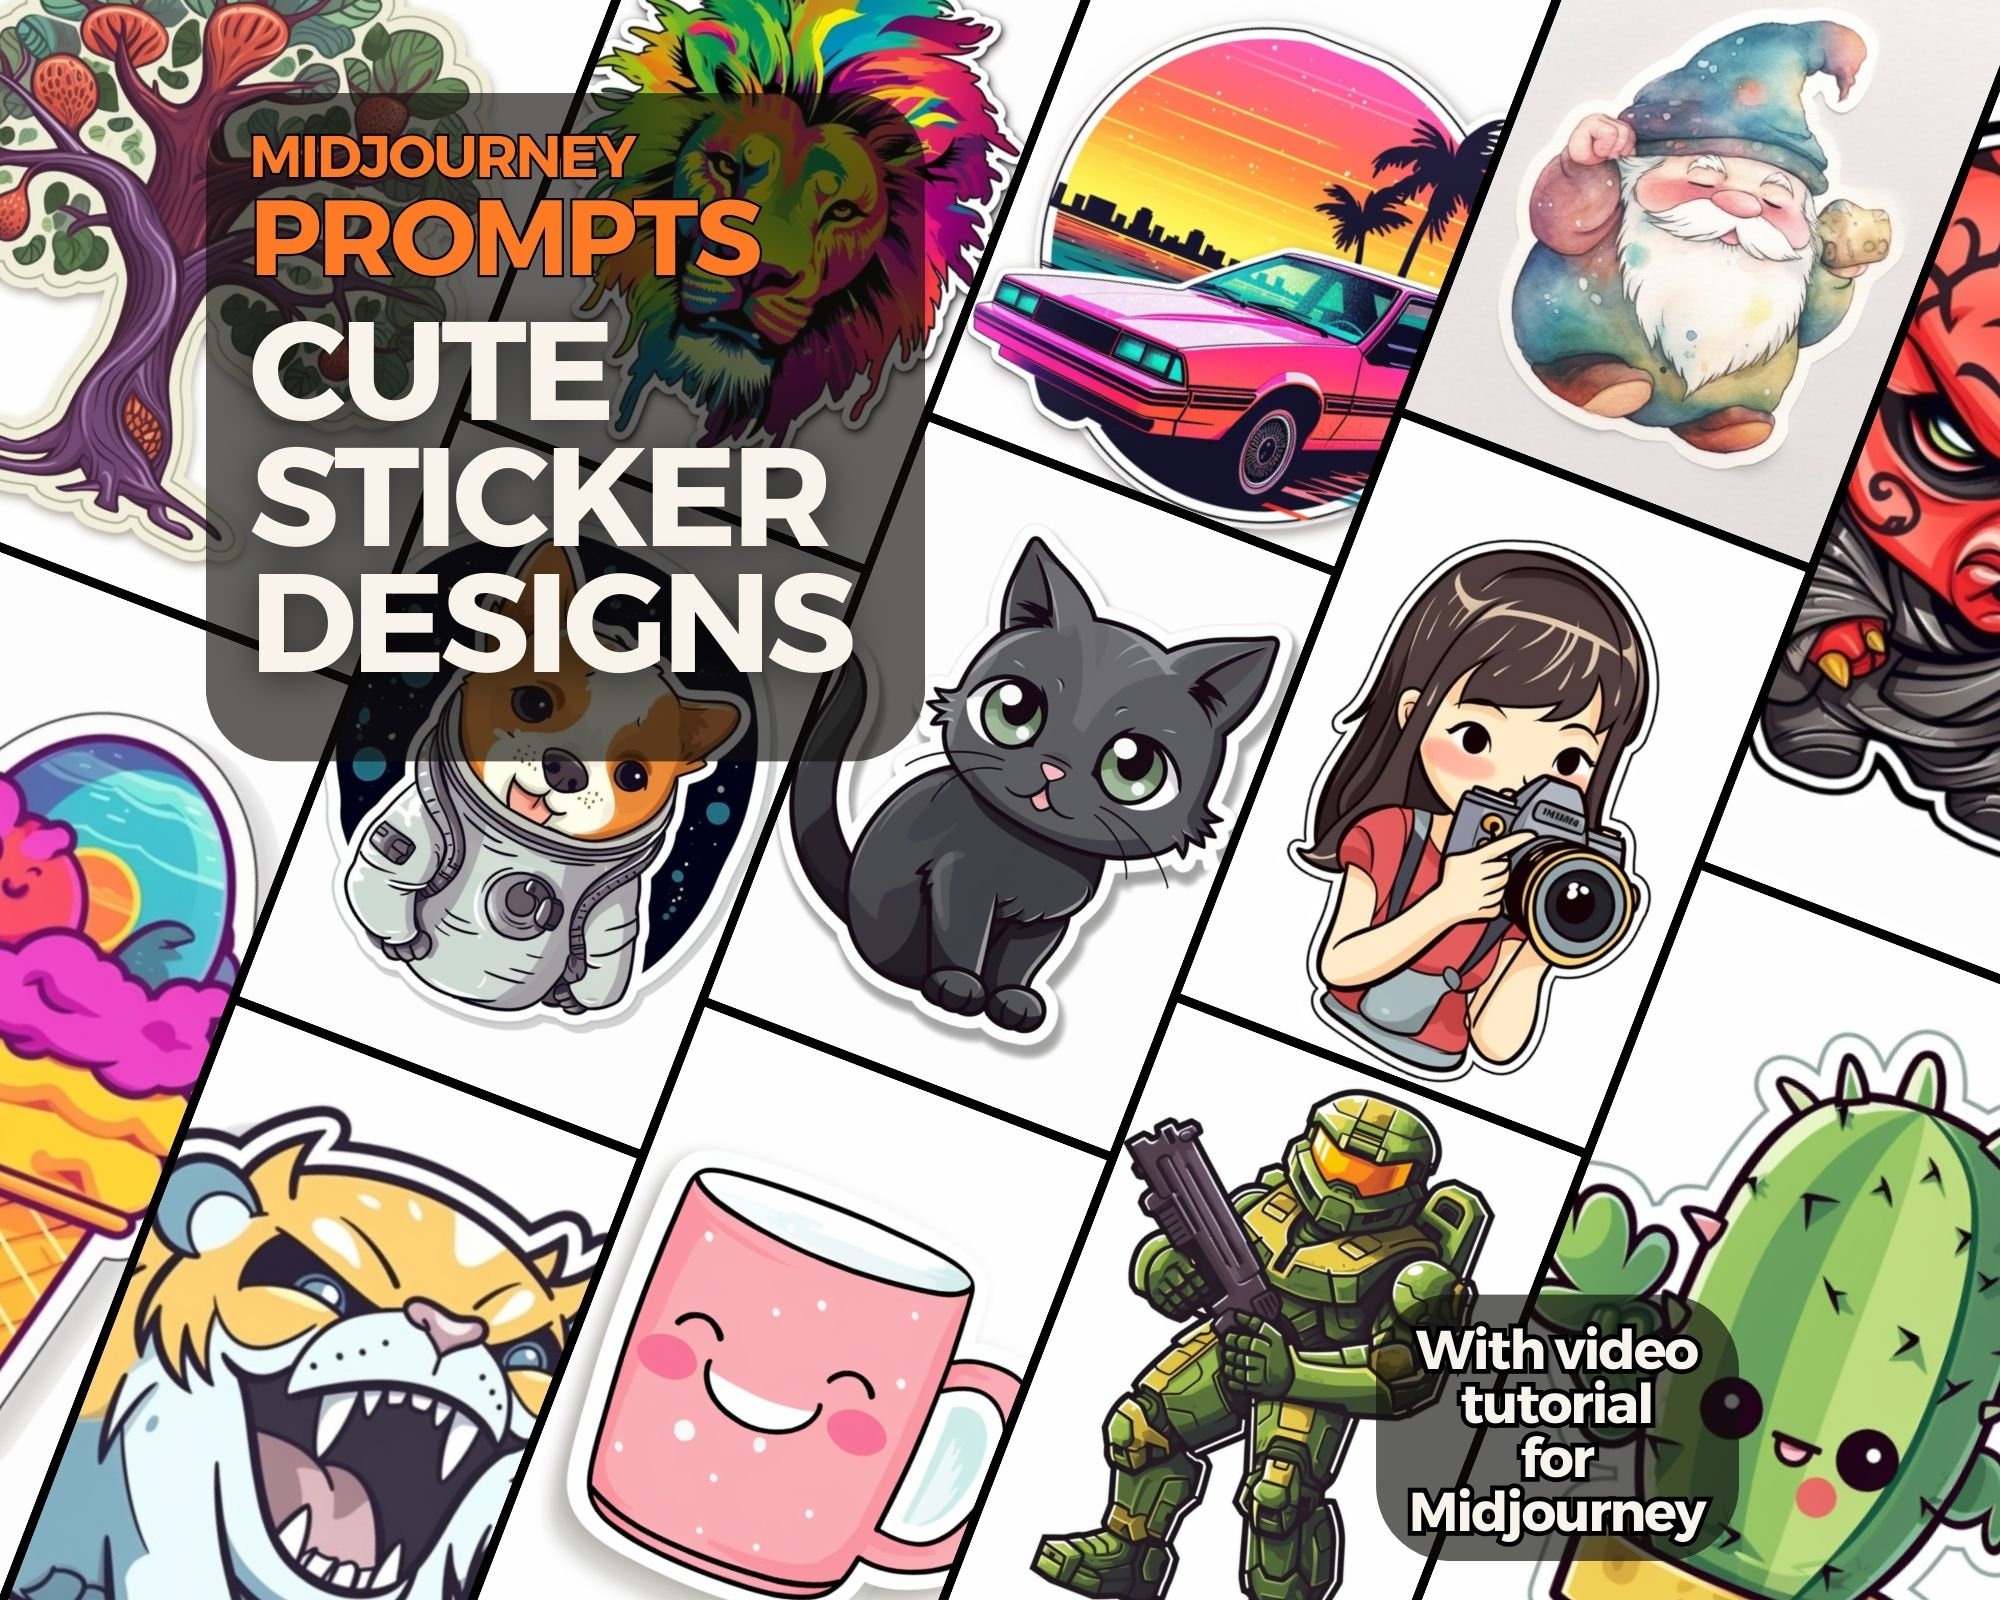 Cute Animal Sticker Packs Midjourney Prompt